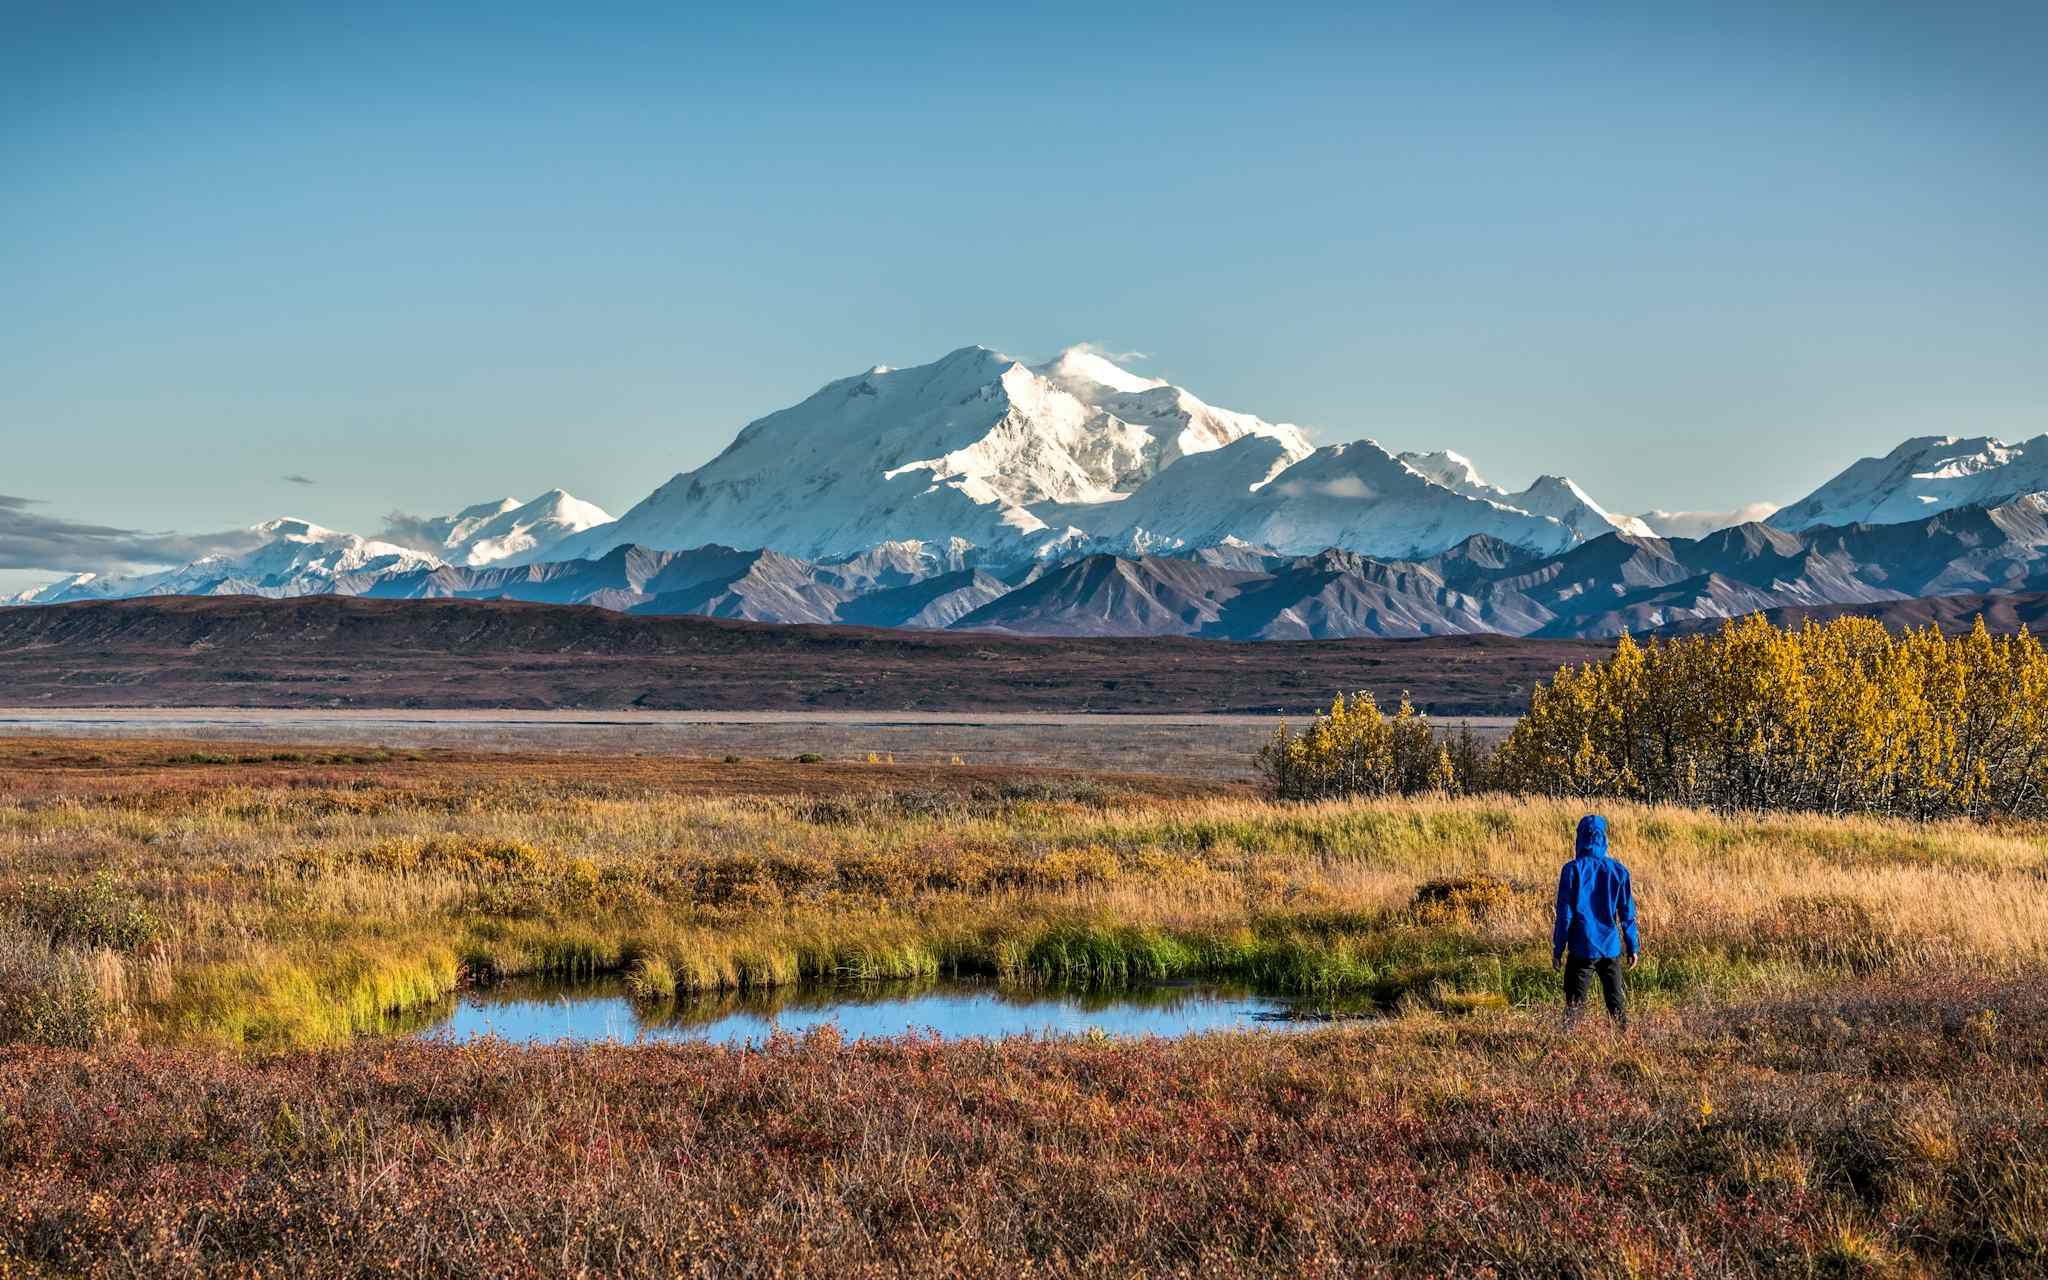 Hiking in Denali National Park, Alaska, USA
Shutterstock: 1887234592
